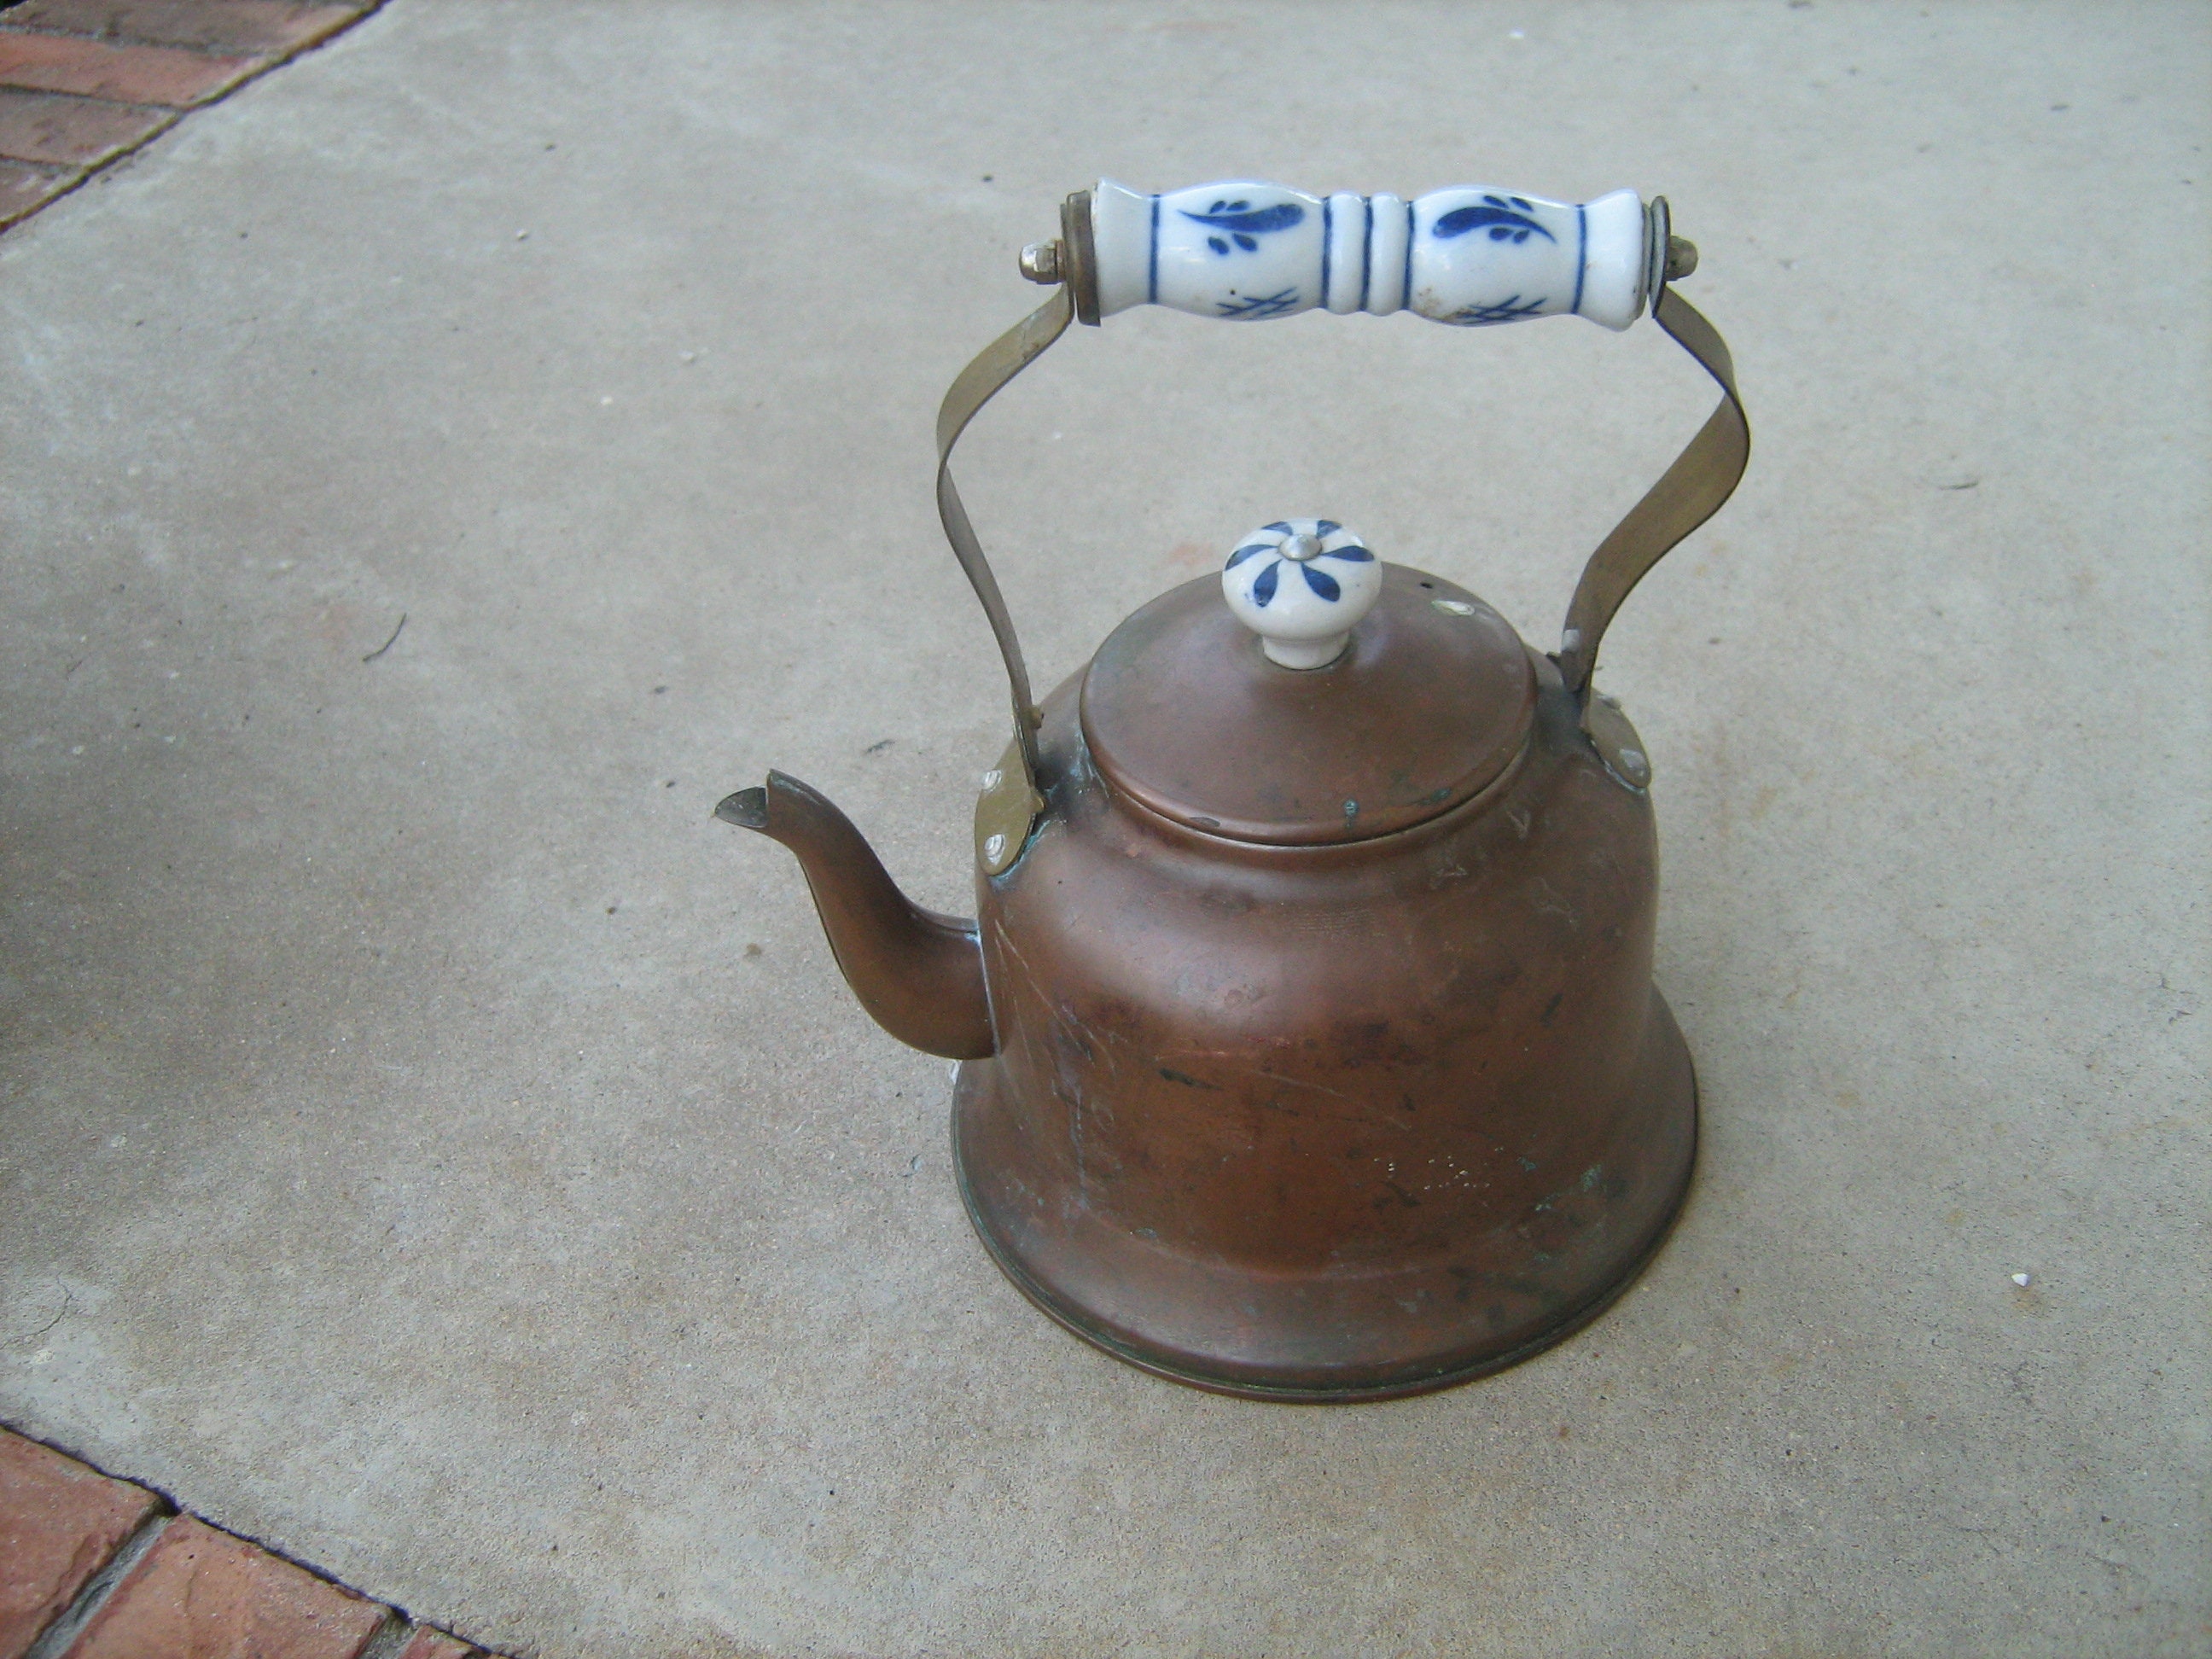 Encommium Zegenen leeg Copper tea kettle with blue and white ceramic handle and | Etsy